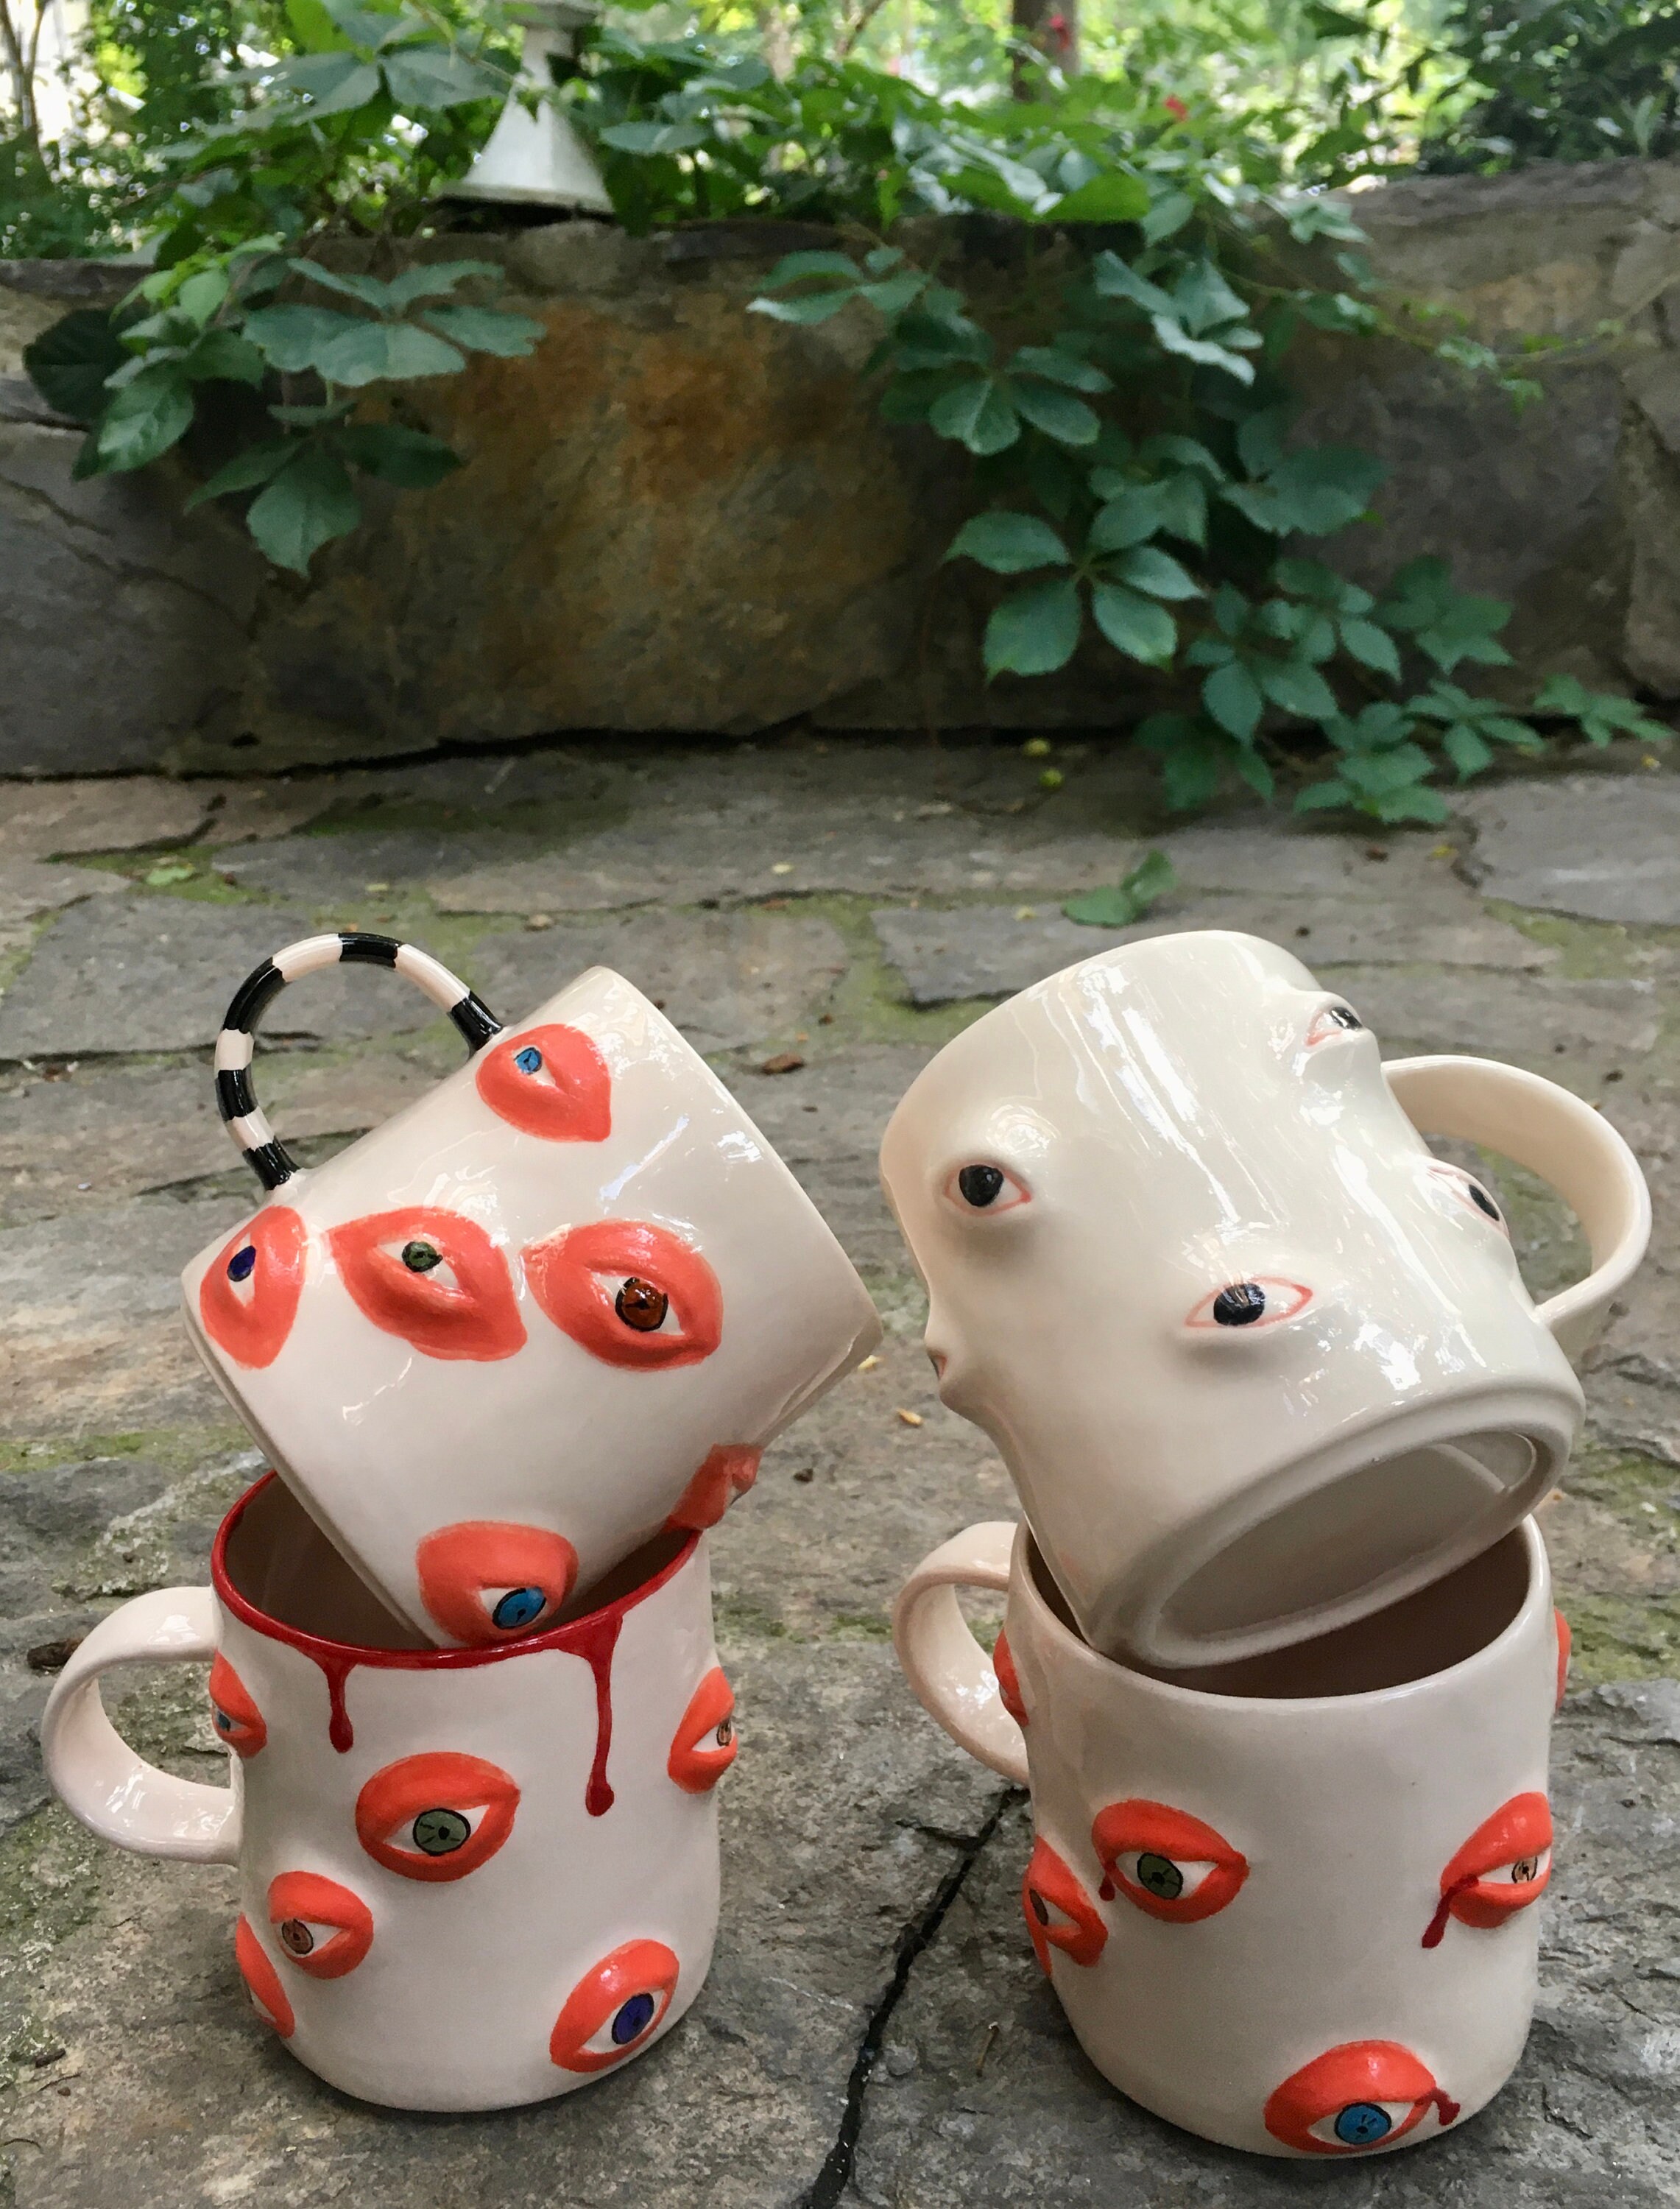 Black Eyes Coffee Mug, Large Clay Tea Mug, Hand Painted Coffee Pottery Mug, Funky  Mug, Gift for Them, Housewarming Gift, Clay Kitchenware 